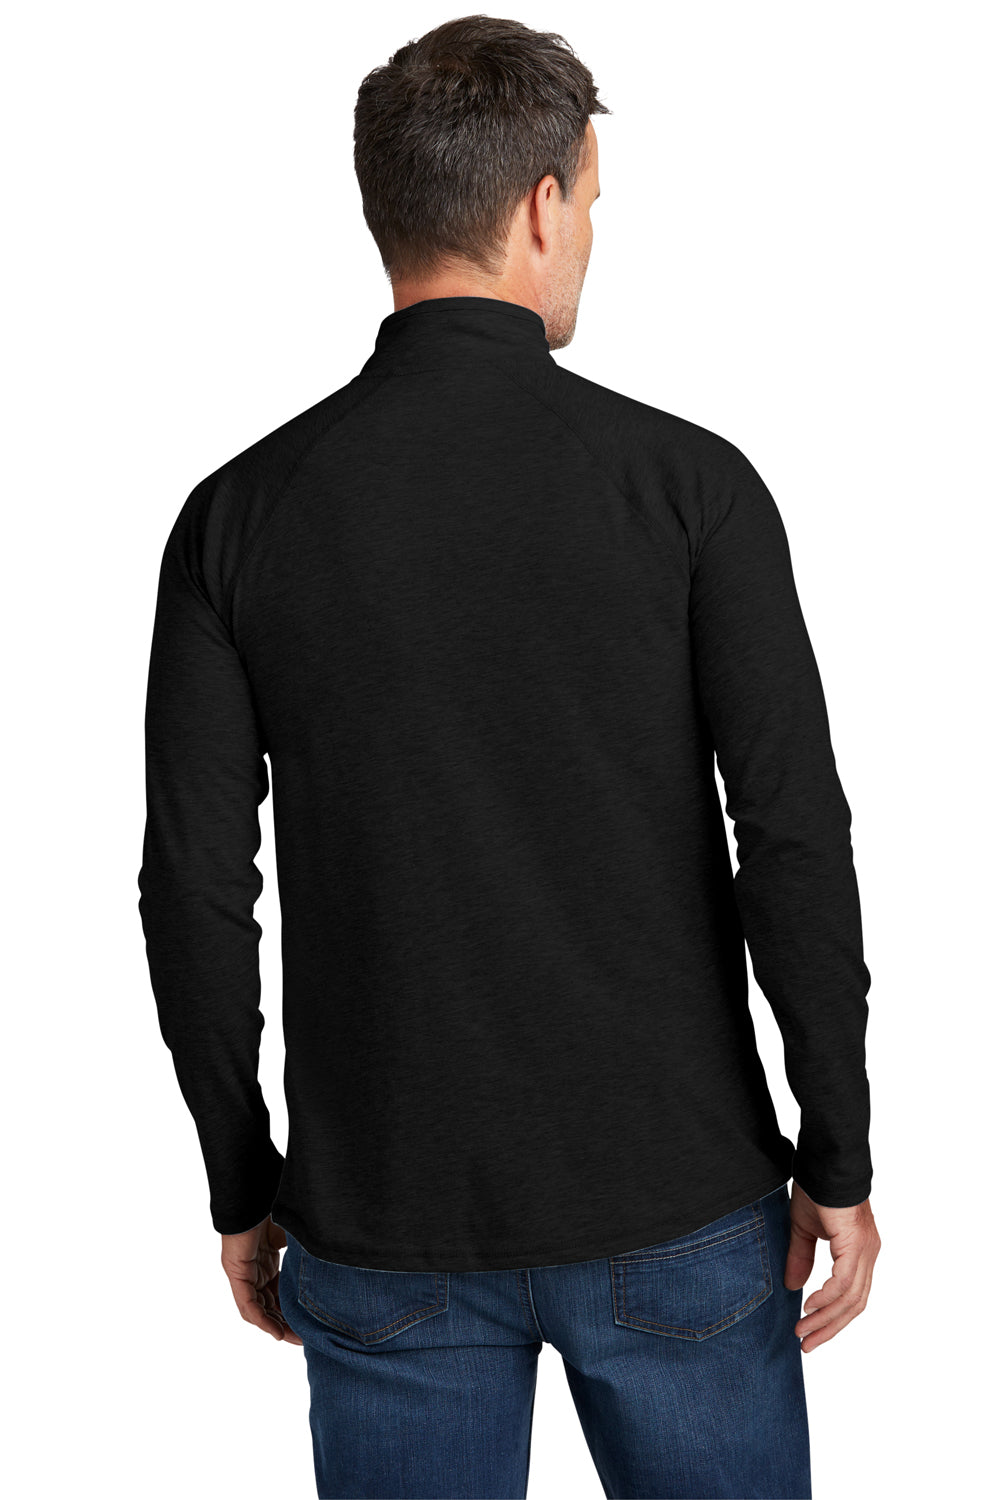 Carhartt CT104255 Mens Force Moisture Wicking 1/4 Zip Long Sleeve T-Shirt w/ Pocket Black Model Back